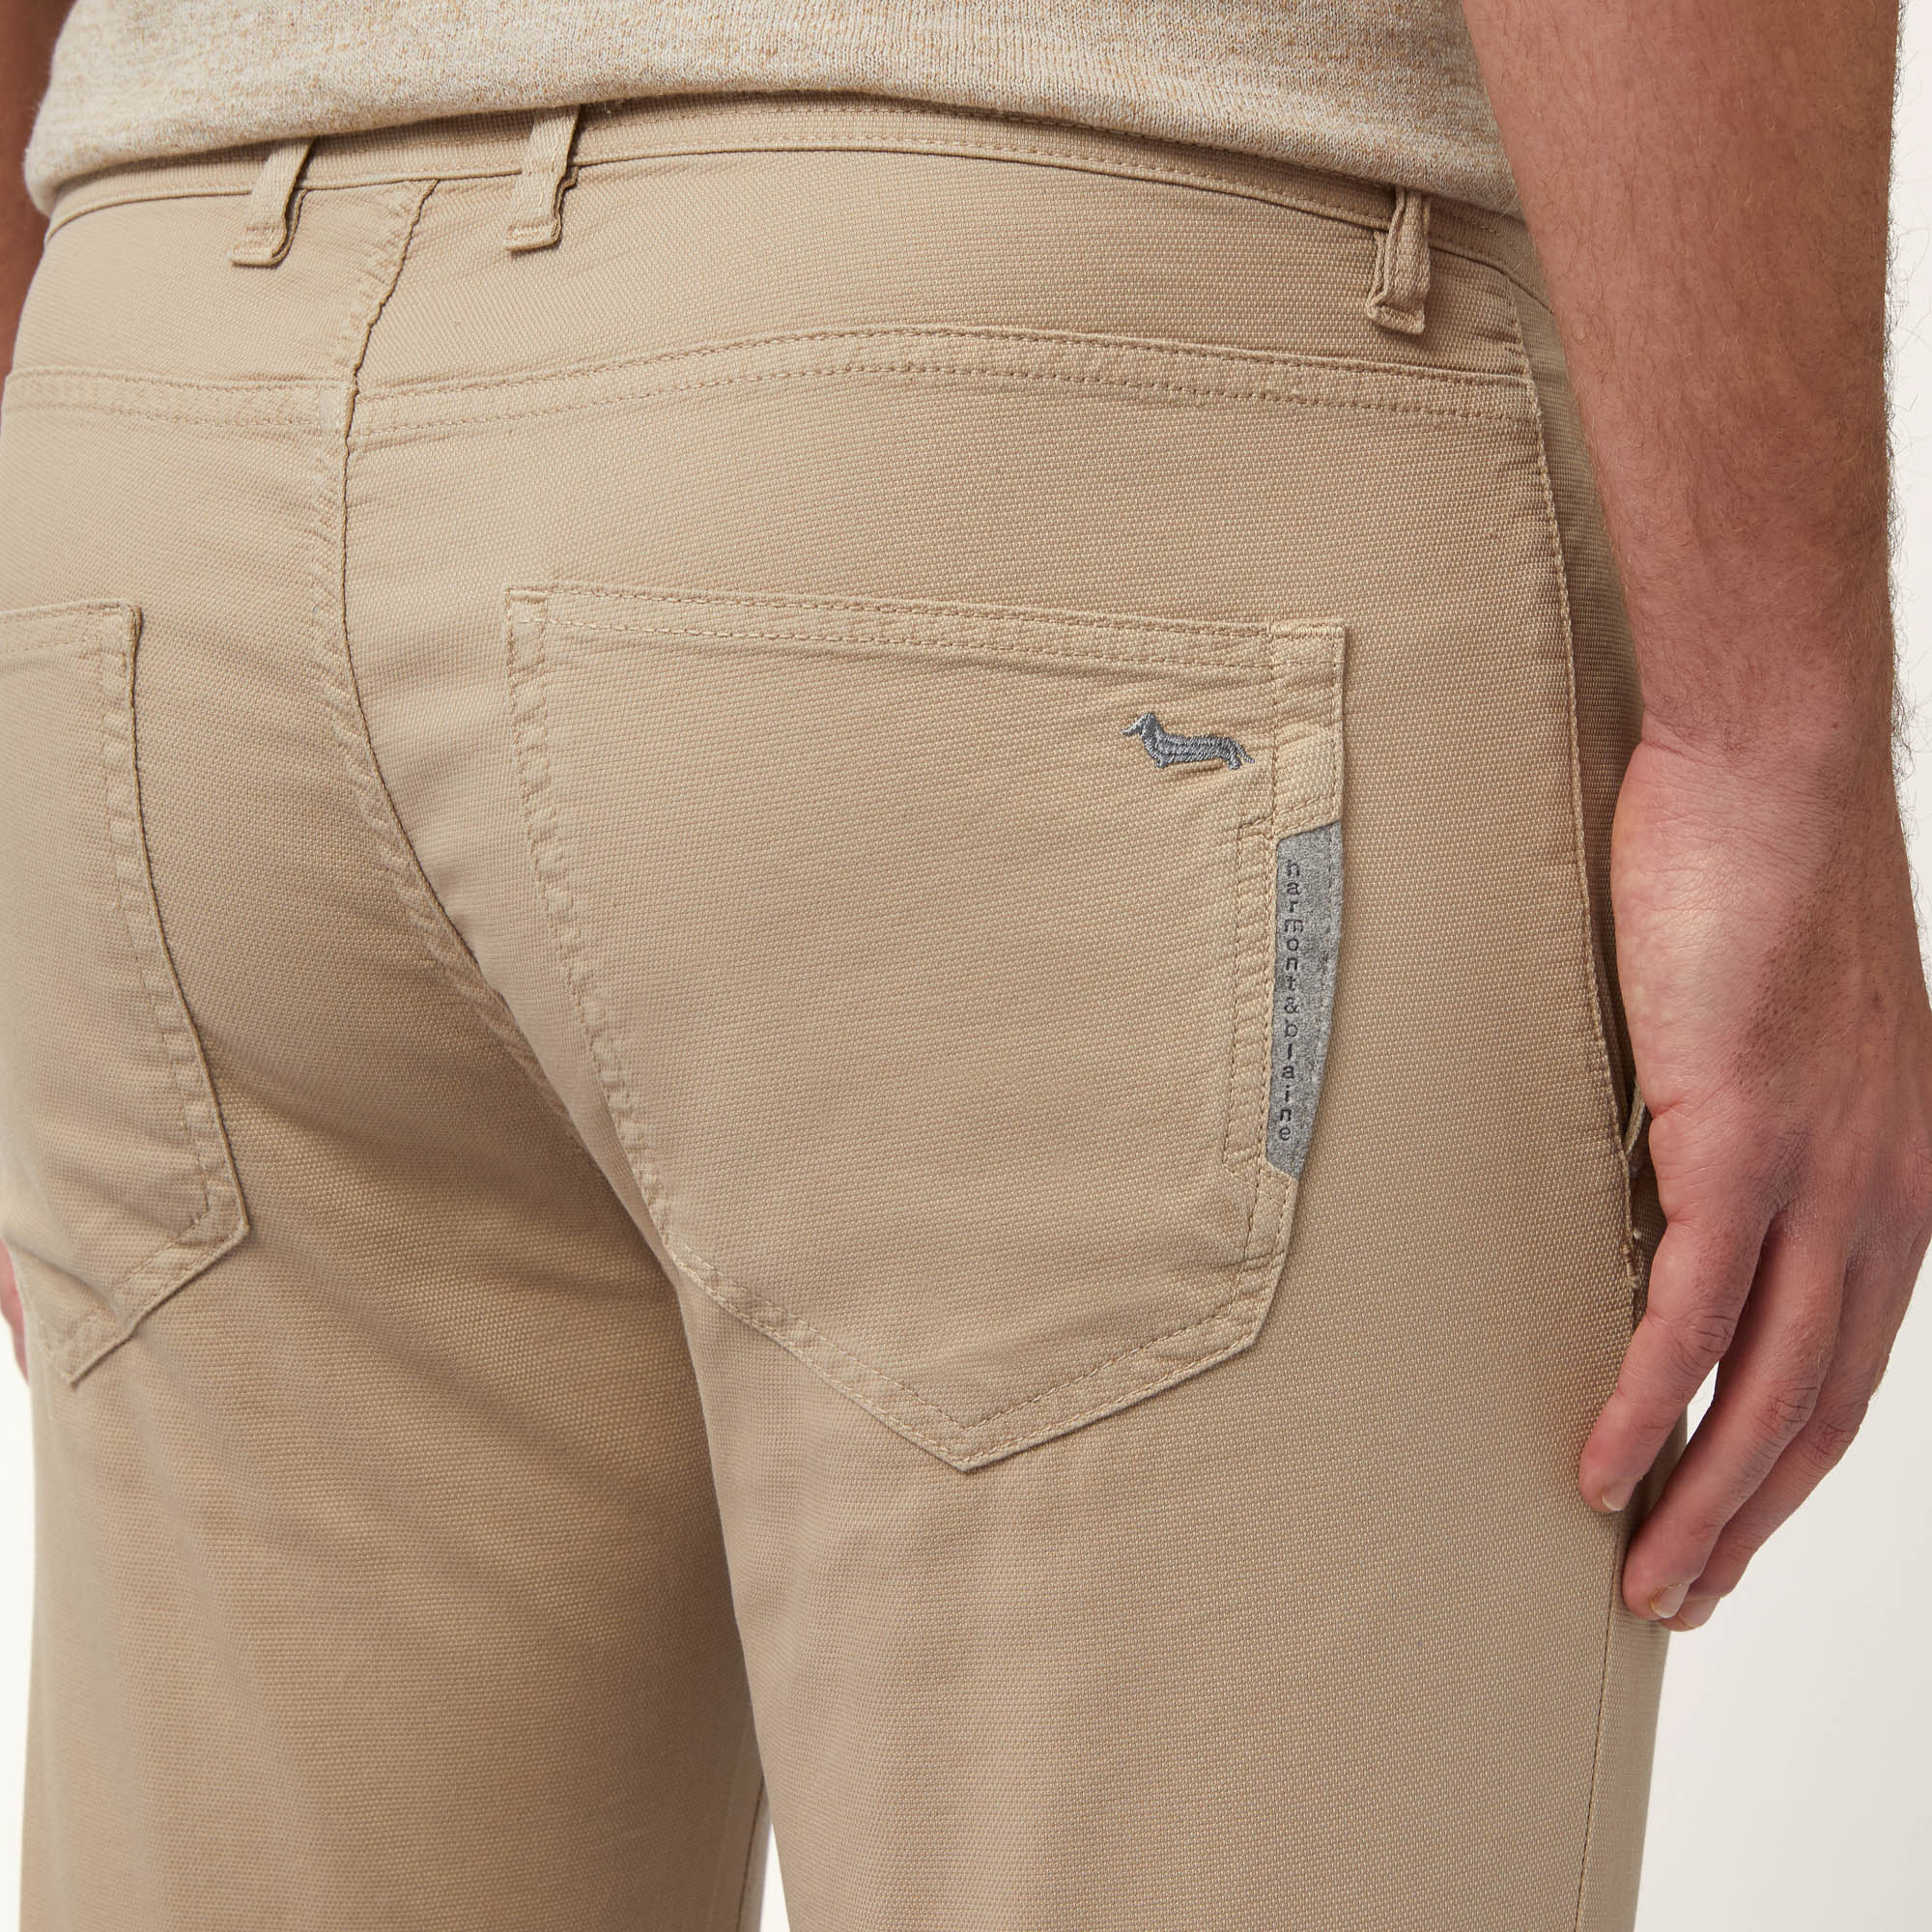 Pantaloni Colorfive, Beige, large image number 2